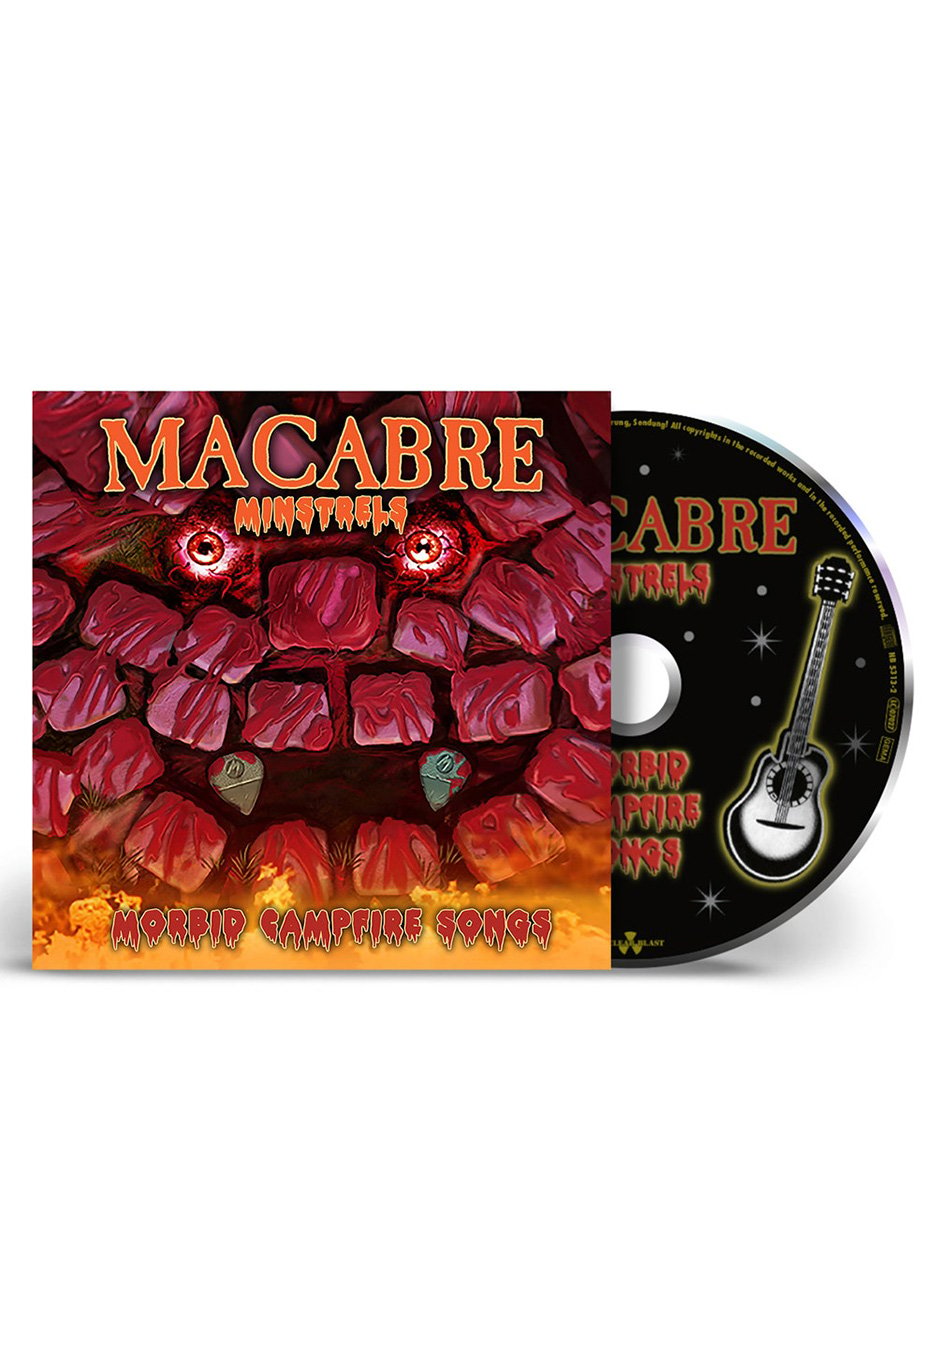 Macabre - Macabre Minstrels: Morbid Campfire Songs Remastered) - Mini CD